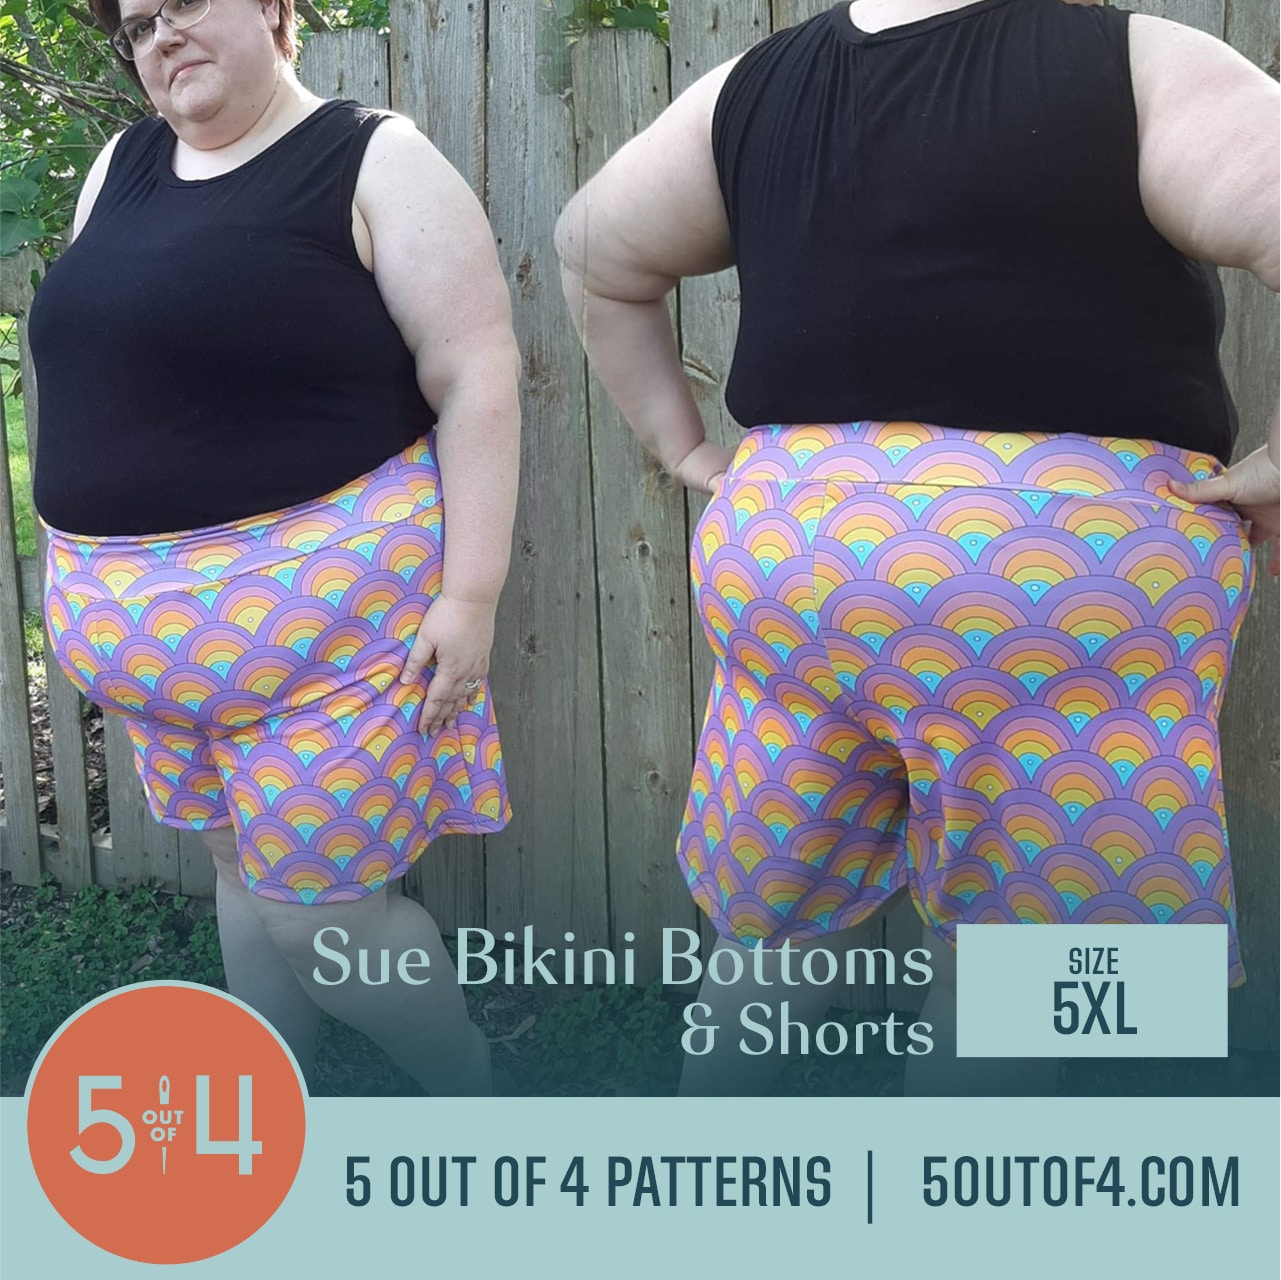 Peggy Bikini, Crop, and Tankini - 5 out of 4 Patterns